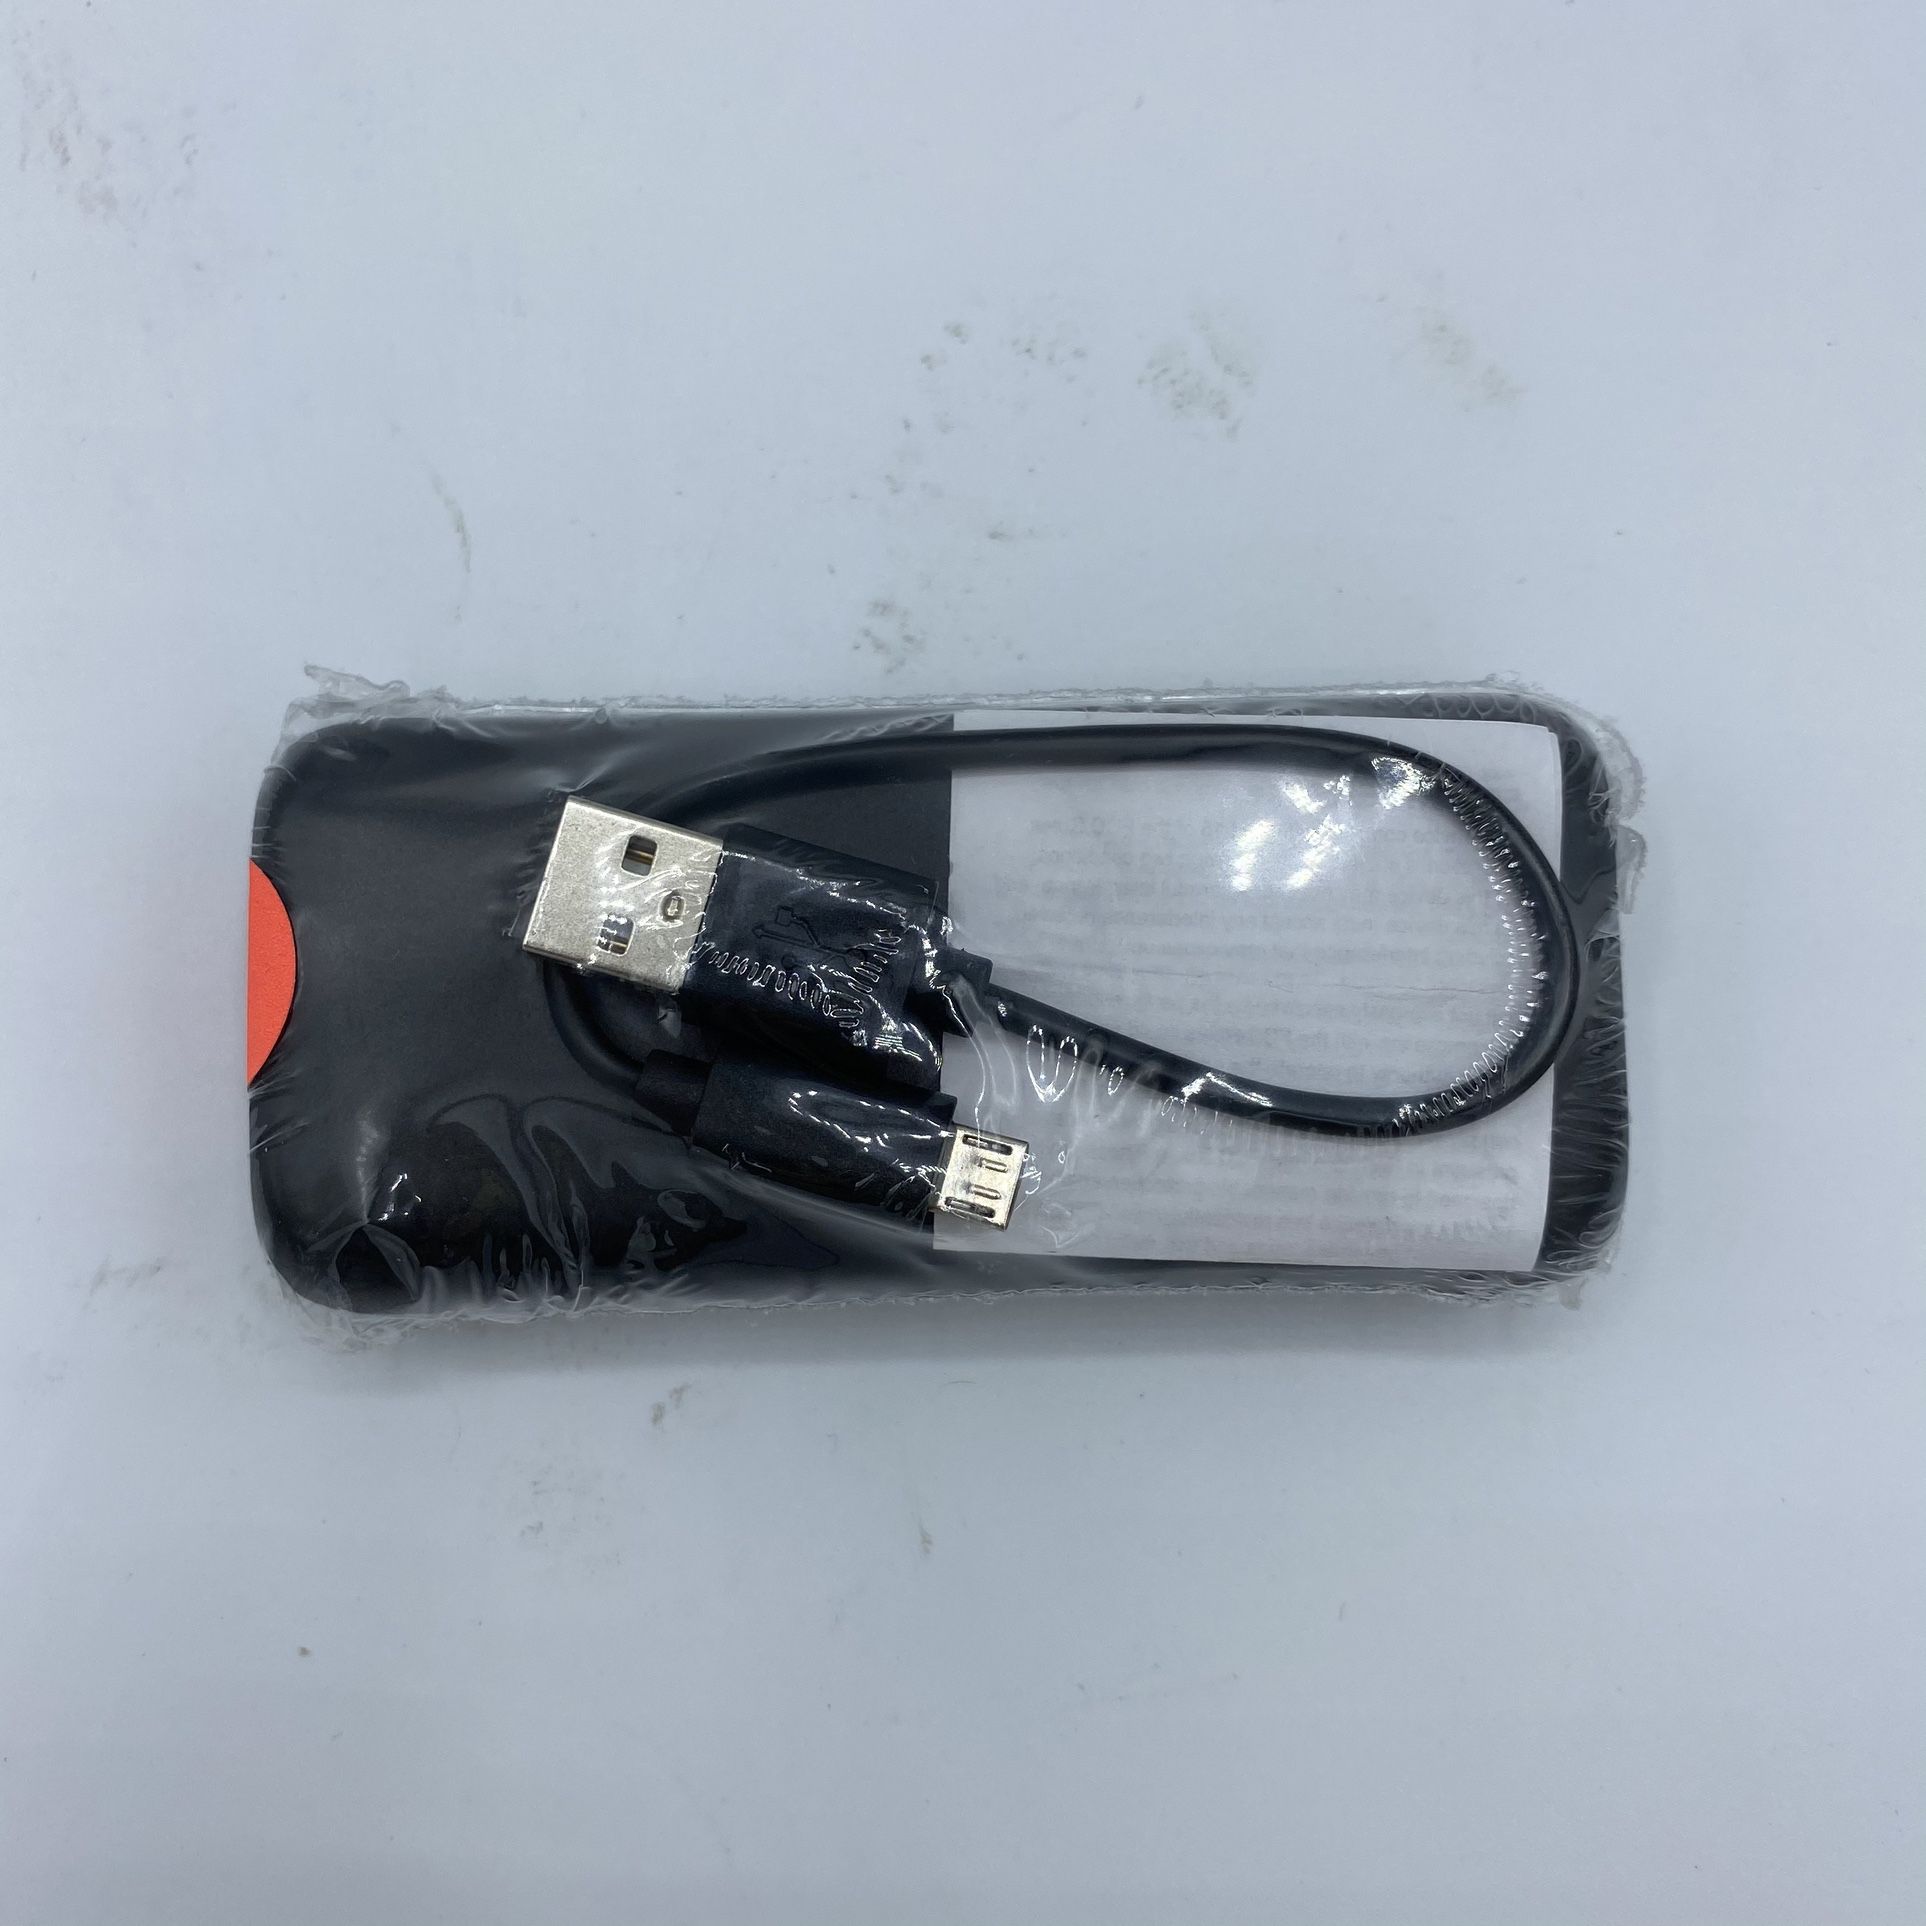 Onn Portable Battery Power Bank 6700 mAh Micro USB Cable 1ft Black 